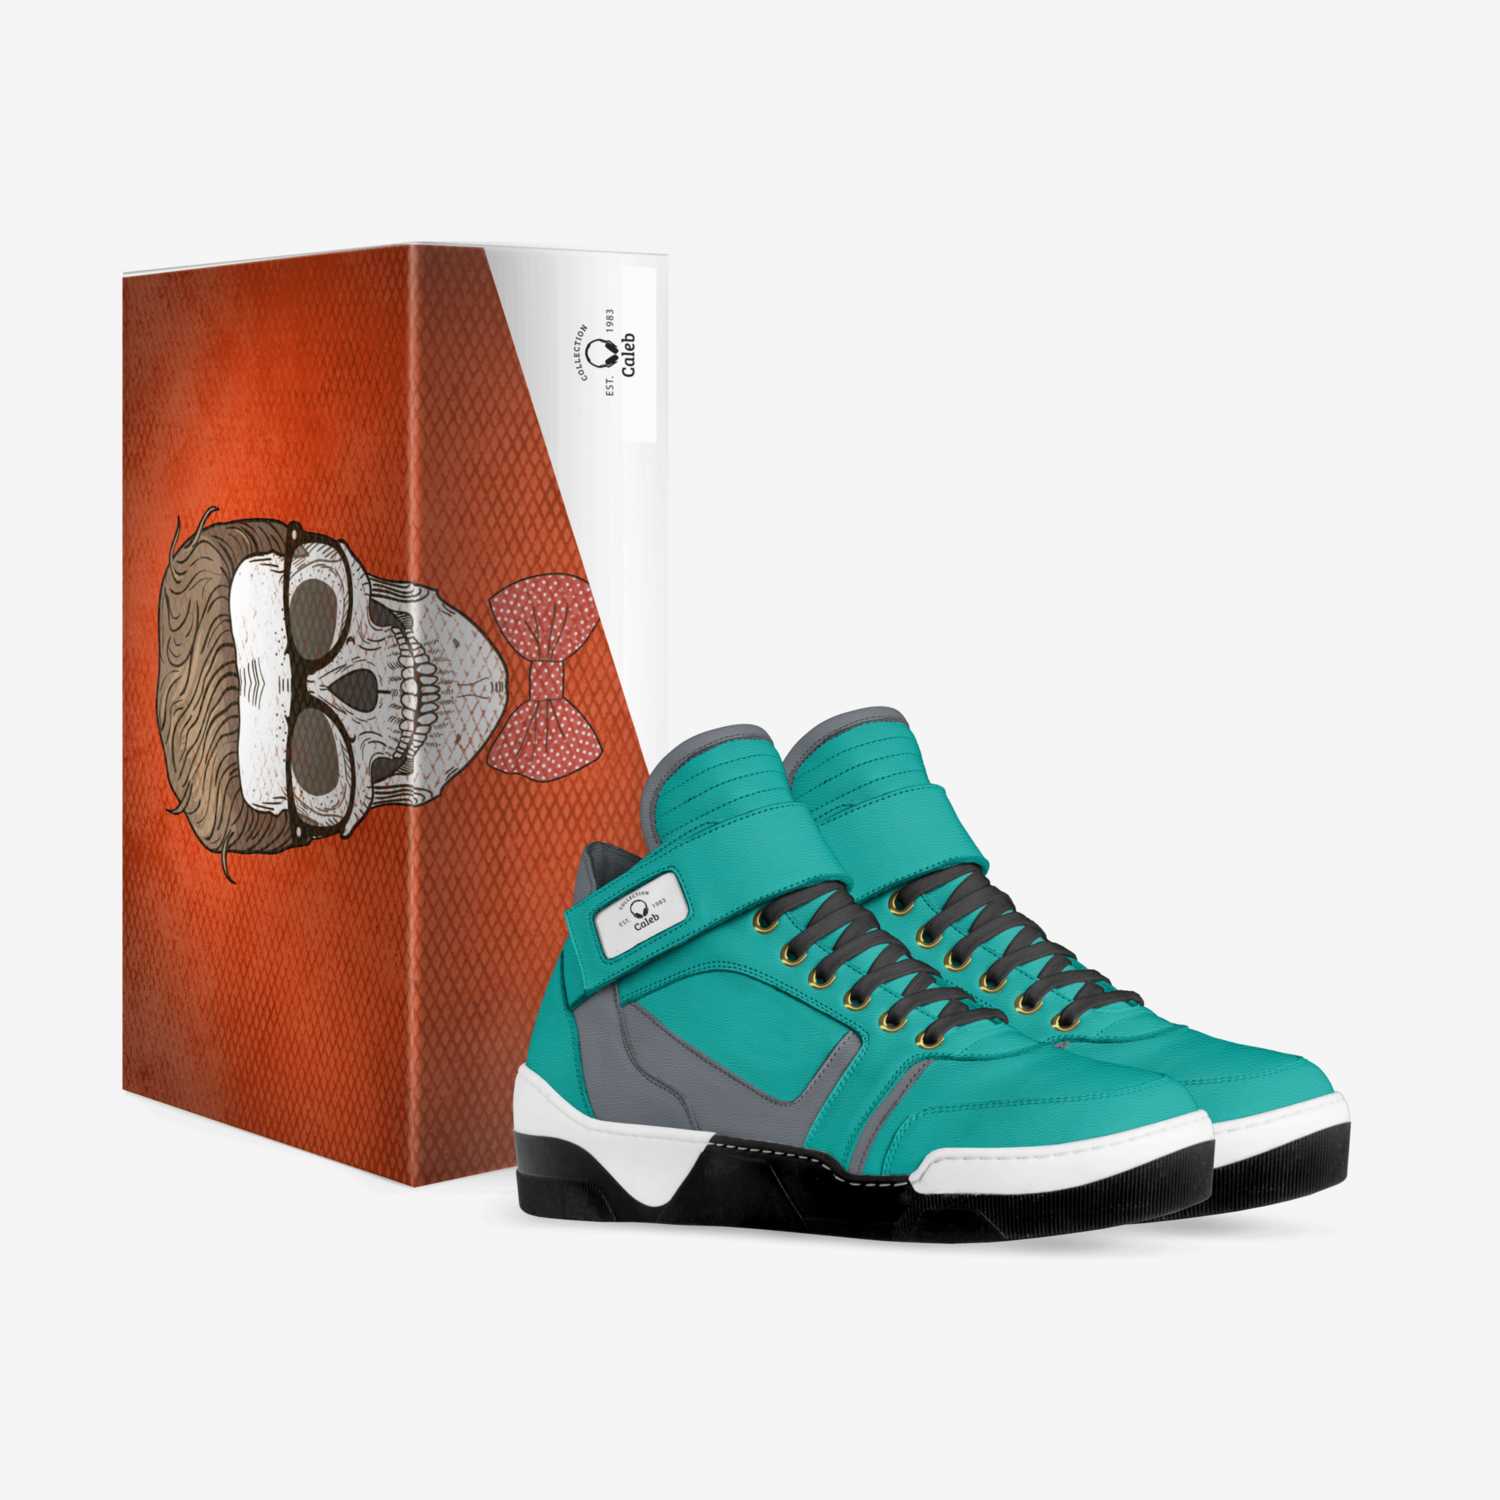 Vape custom made in Italy shoes by Vapeking345 | Box view